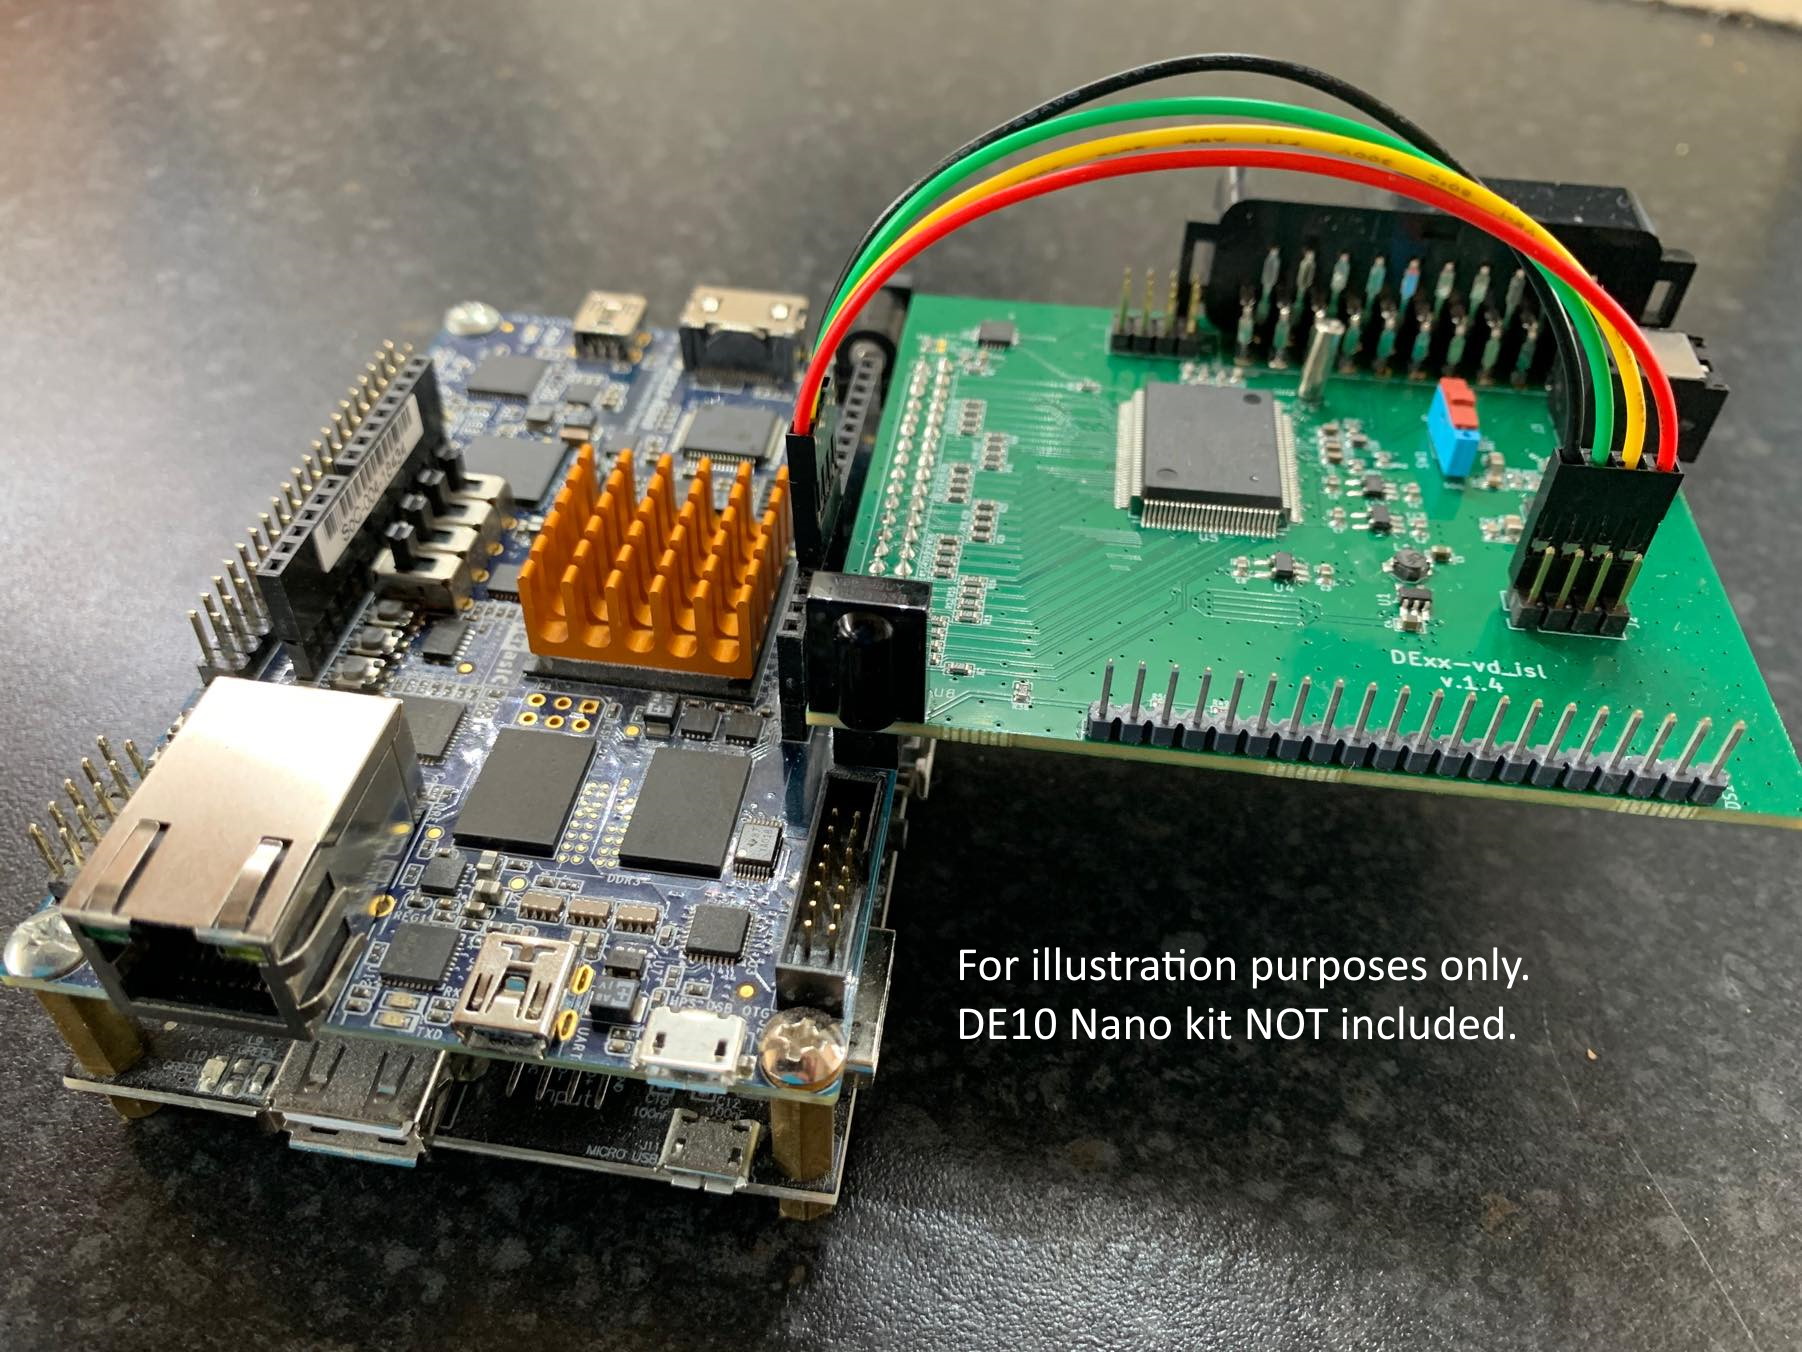 DE10-Nanoボードを『OSSC Pro Lite』に変える『DExx-vd_isl board』が販売開始。価格は約1万2000円